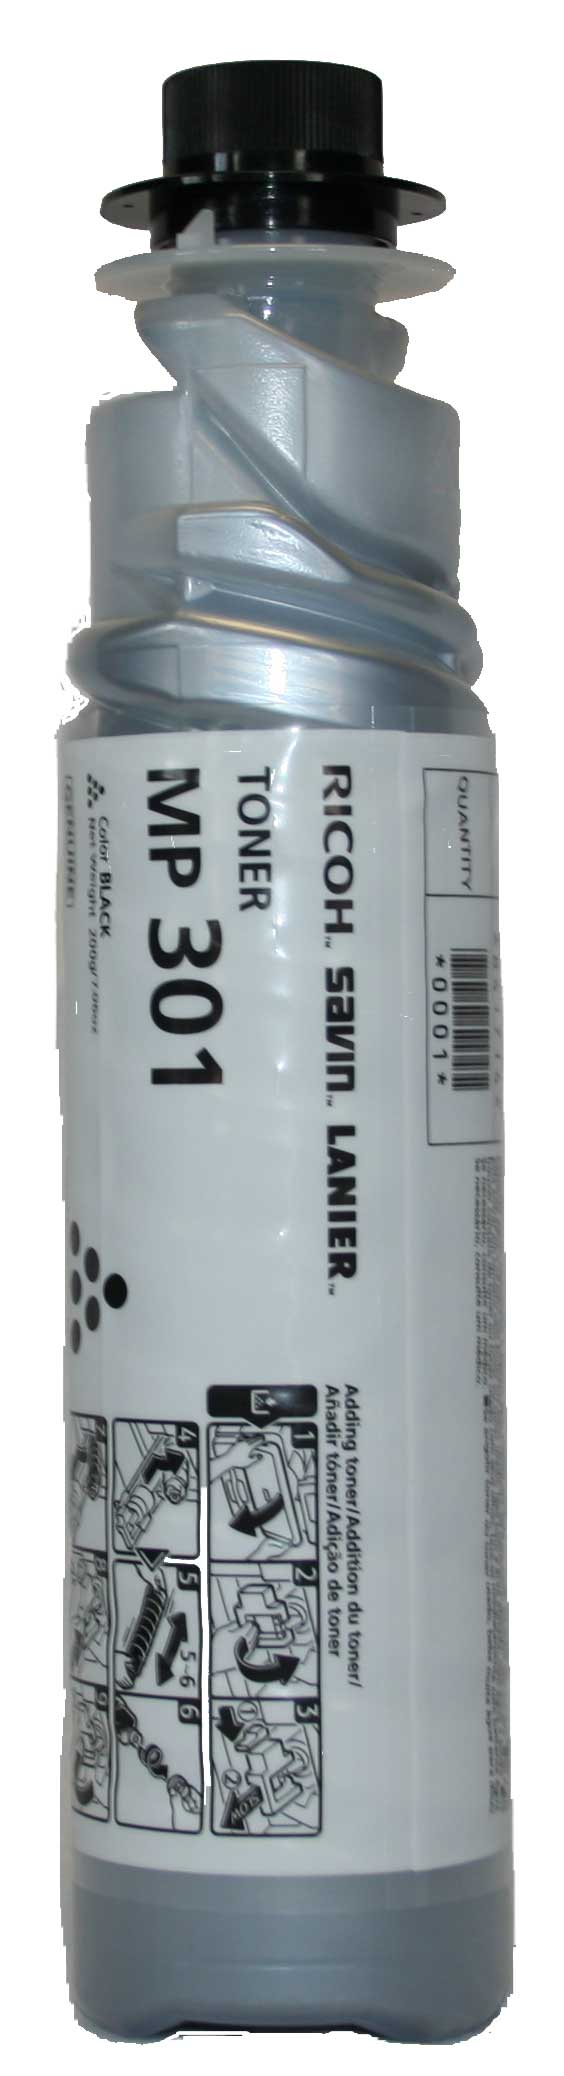 Ricoh Print Cartridge MP 305